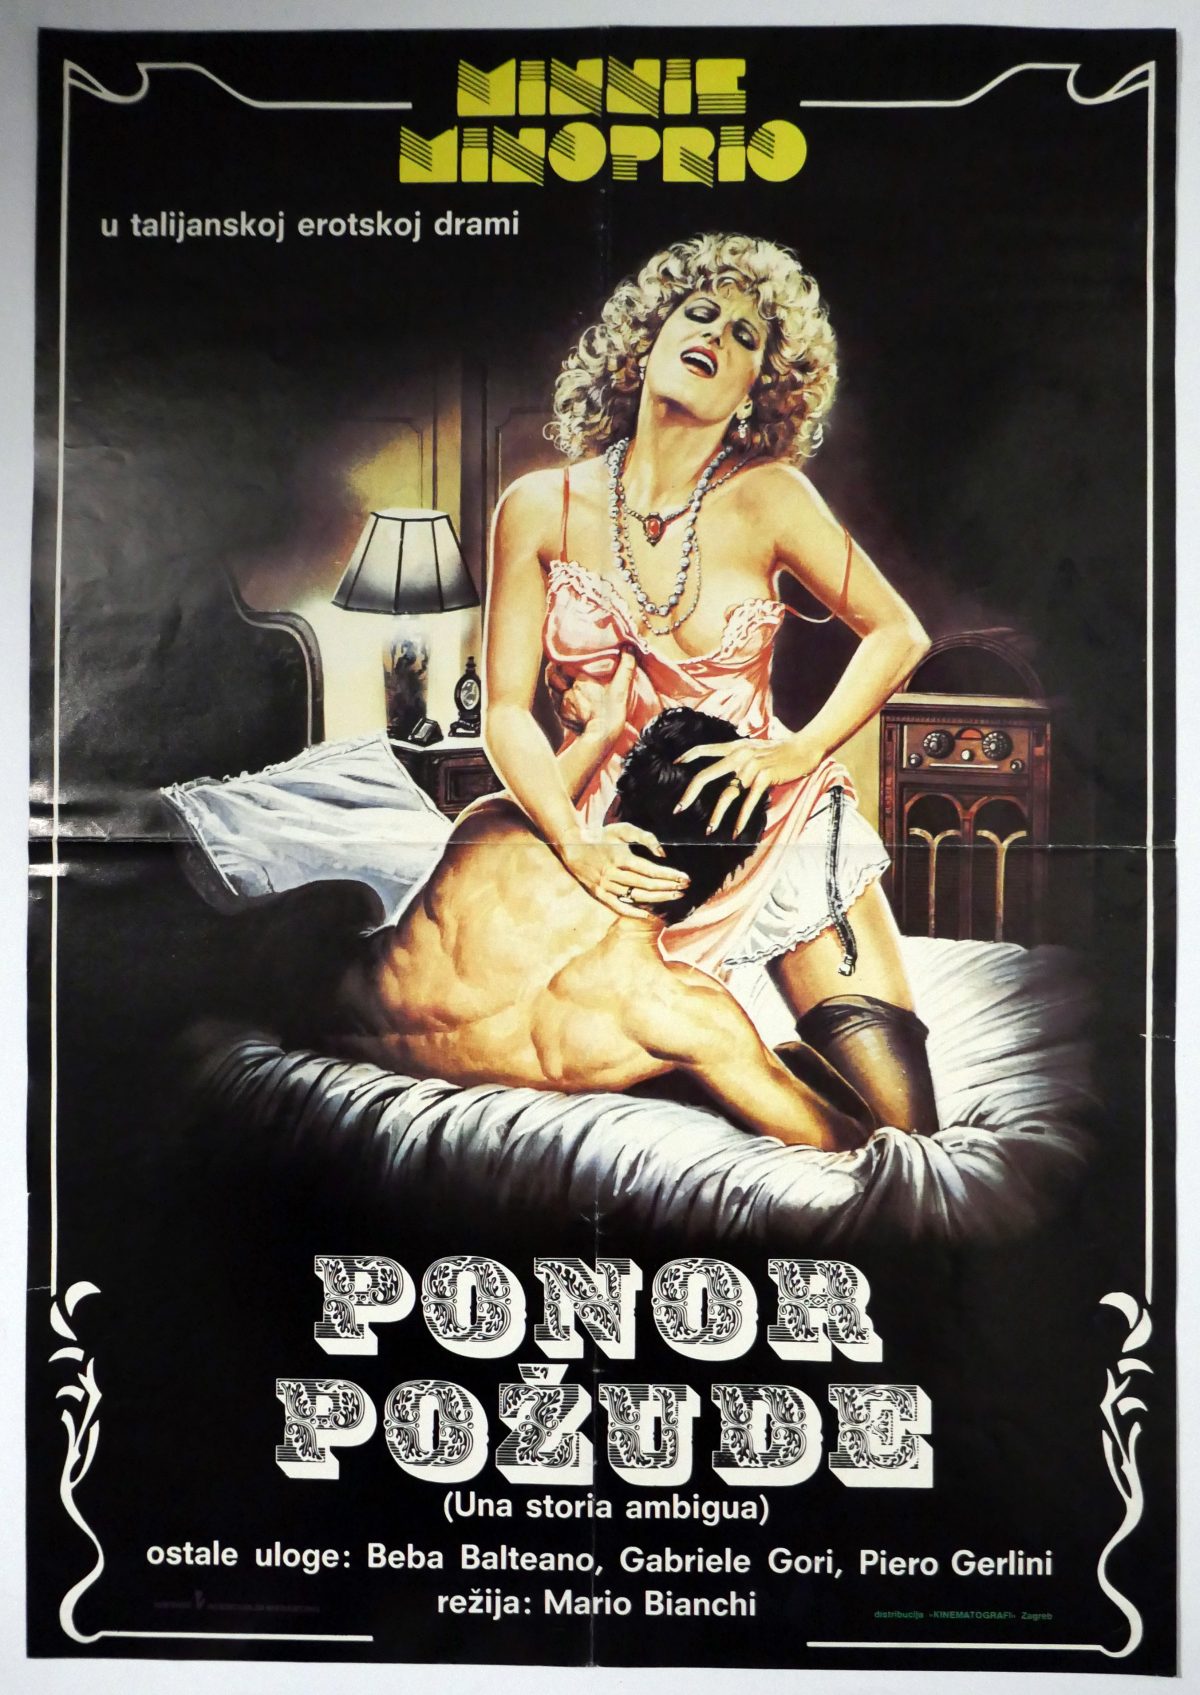 Original vintage poster for the movie Una Storia Ambigua